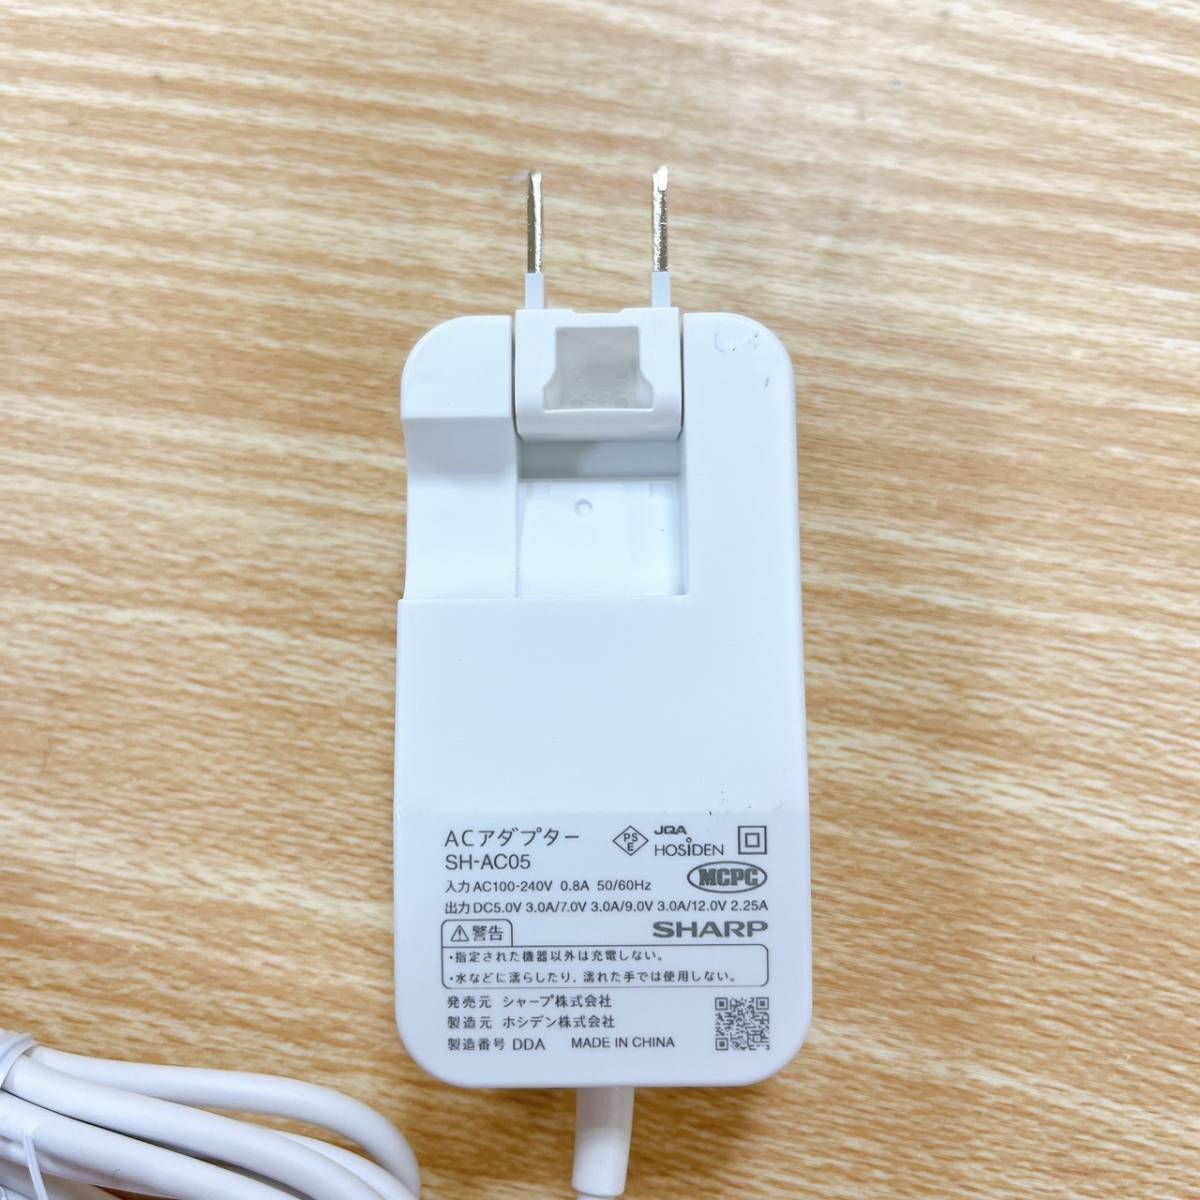  sharp SHARP AC adaptor SH-AC05 white white charger electrification verification settled [15801